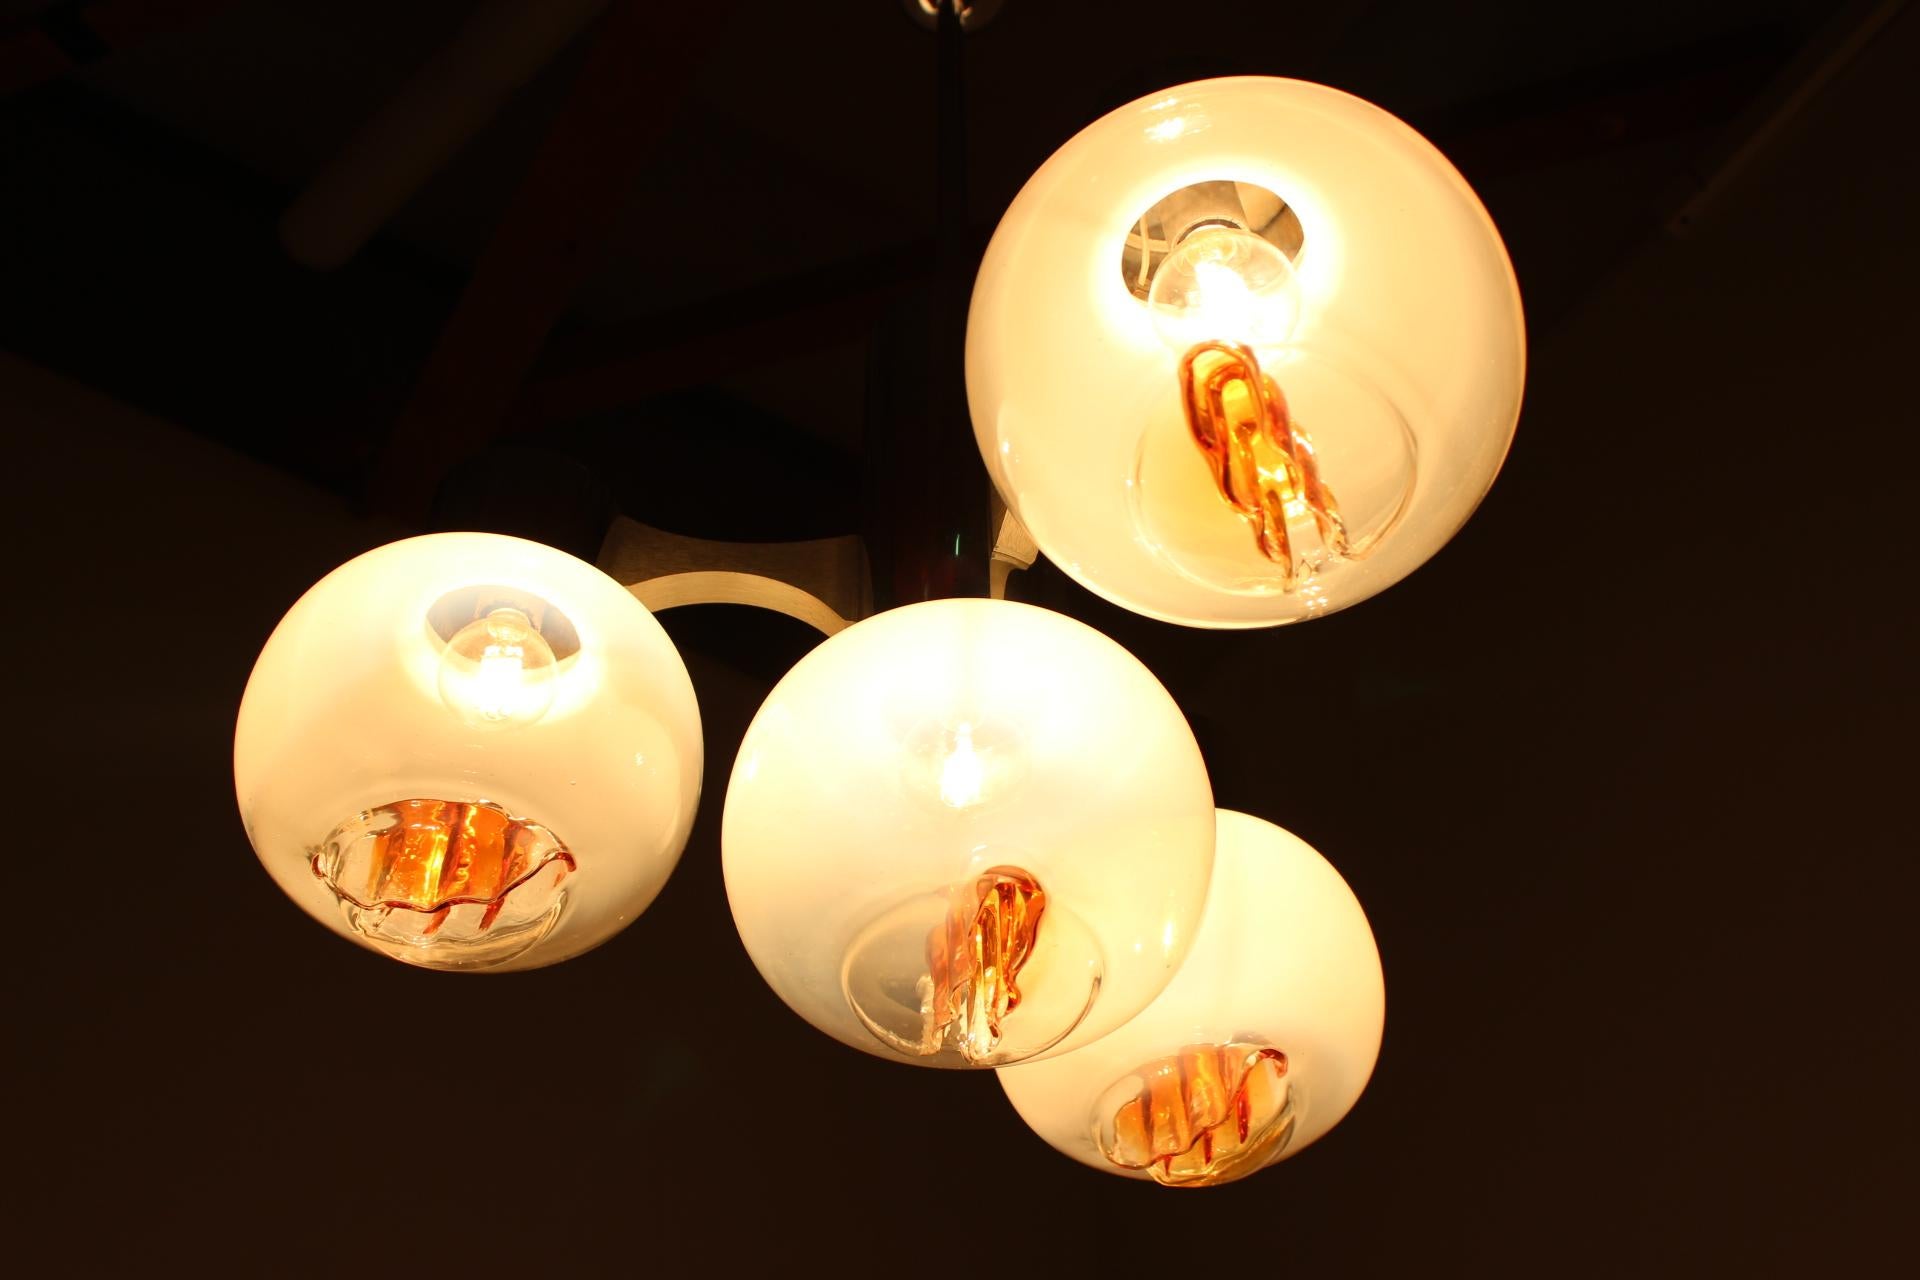 Chandelier. Pendant light. Very nice style of lighting. Four Murano glass balls.